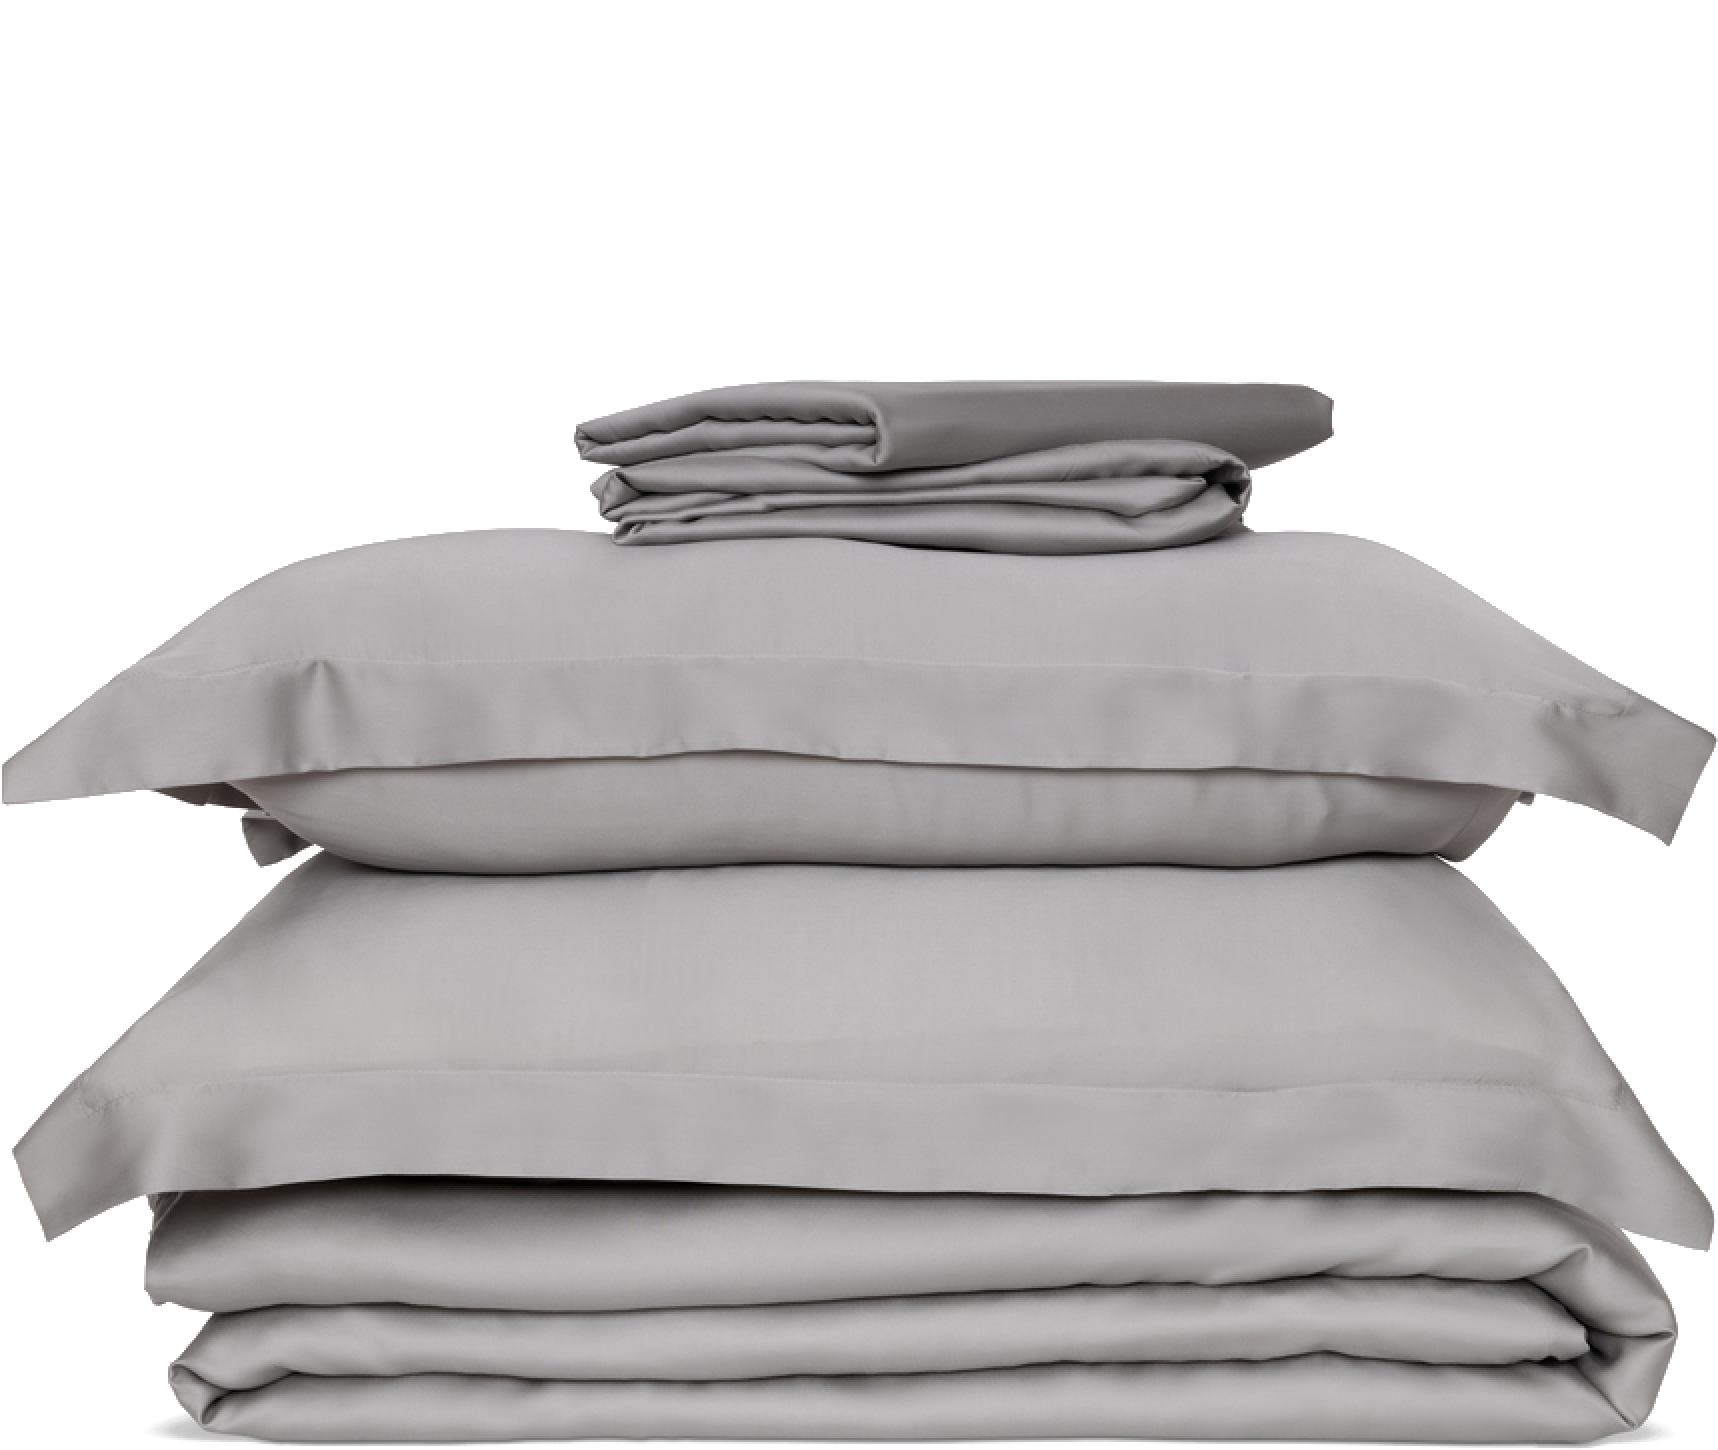 ethical-bedding-eucalyptus-silk-bed-sheets-pillows-duvets-pillowcases-blankets